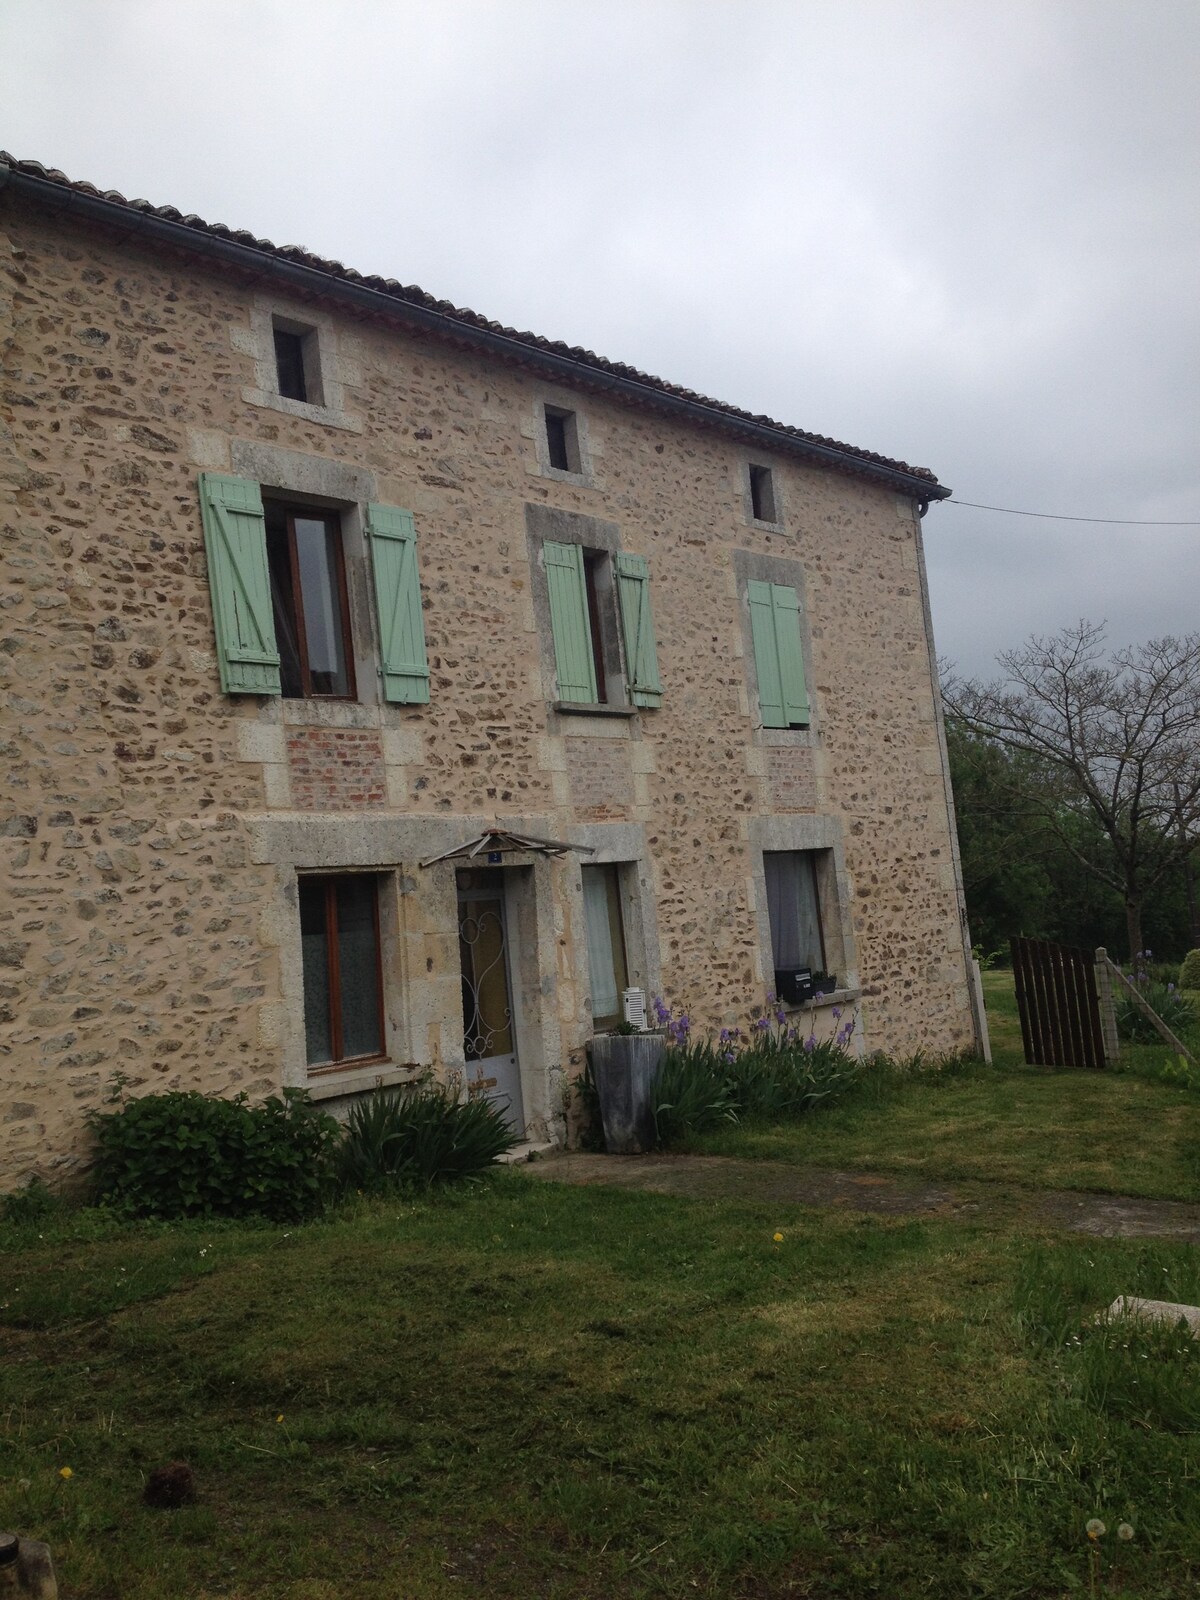 位于上夏朗德湖（ Lakes of Haute Charente l ）正中间的房
子